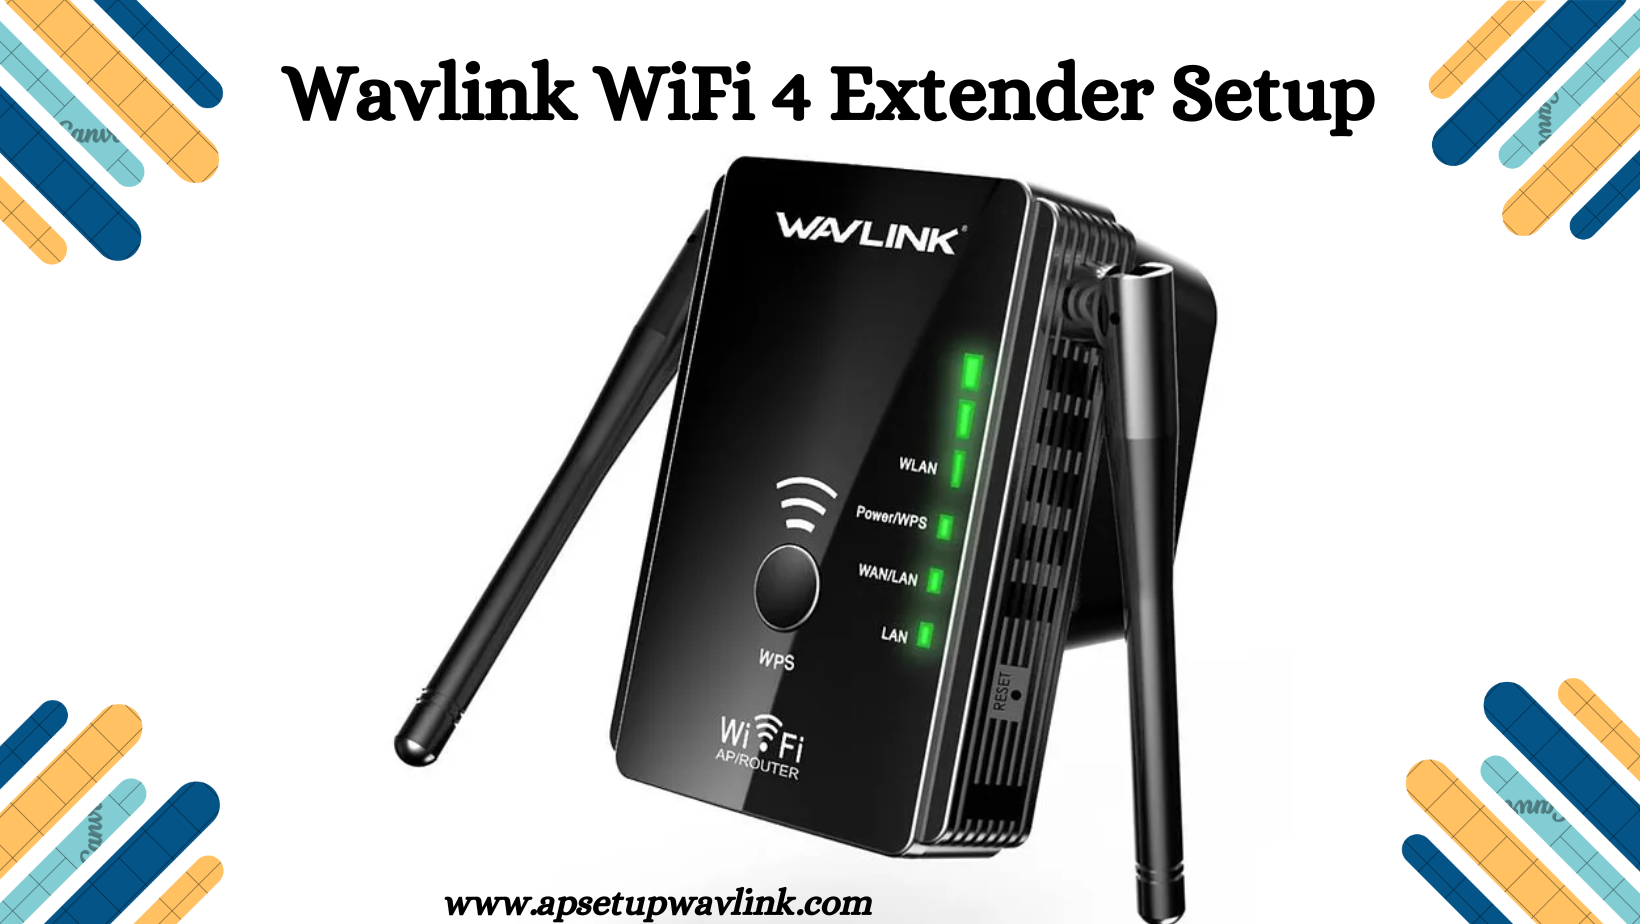 Wavlink WiFi4 Extender Setup